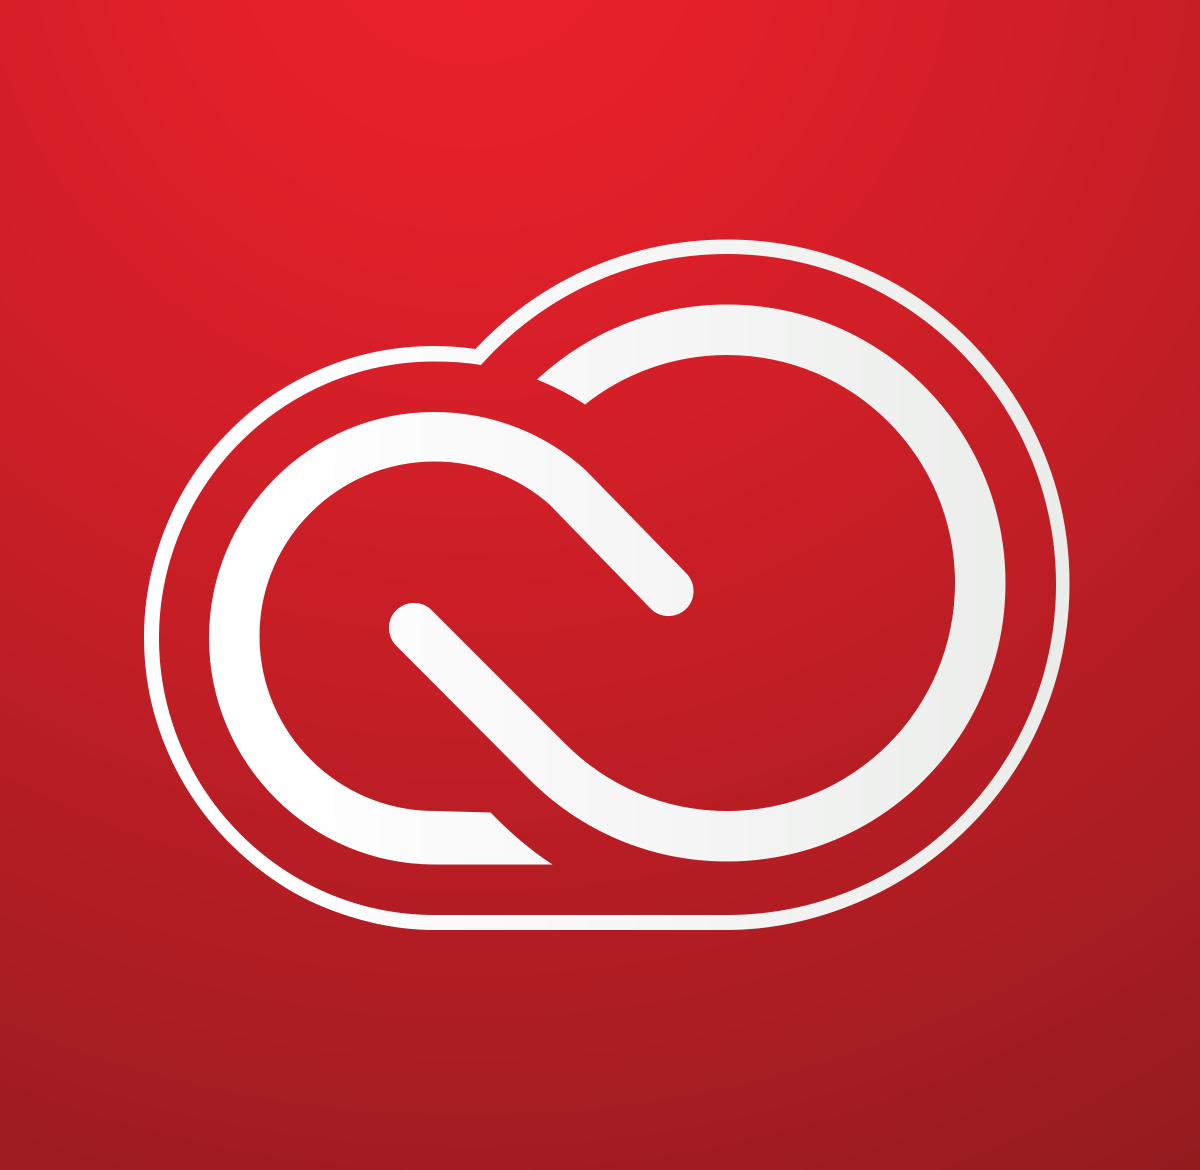 Acrobat Logo - Adobe Creative Cloud